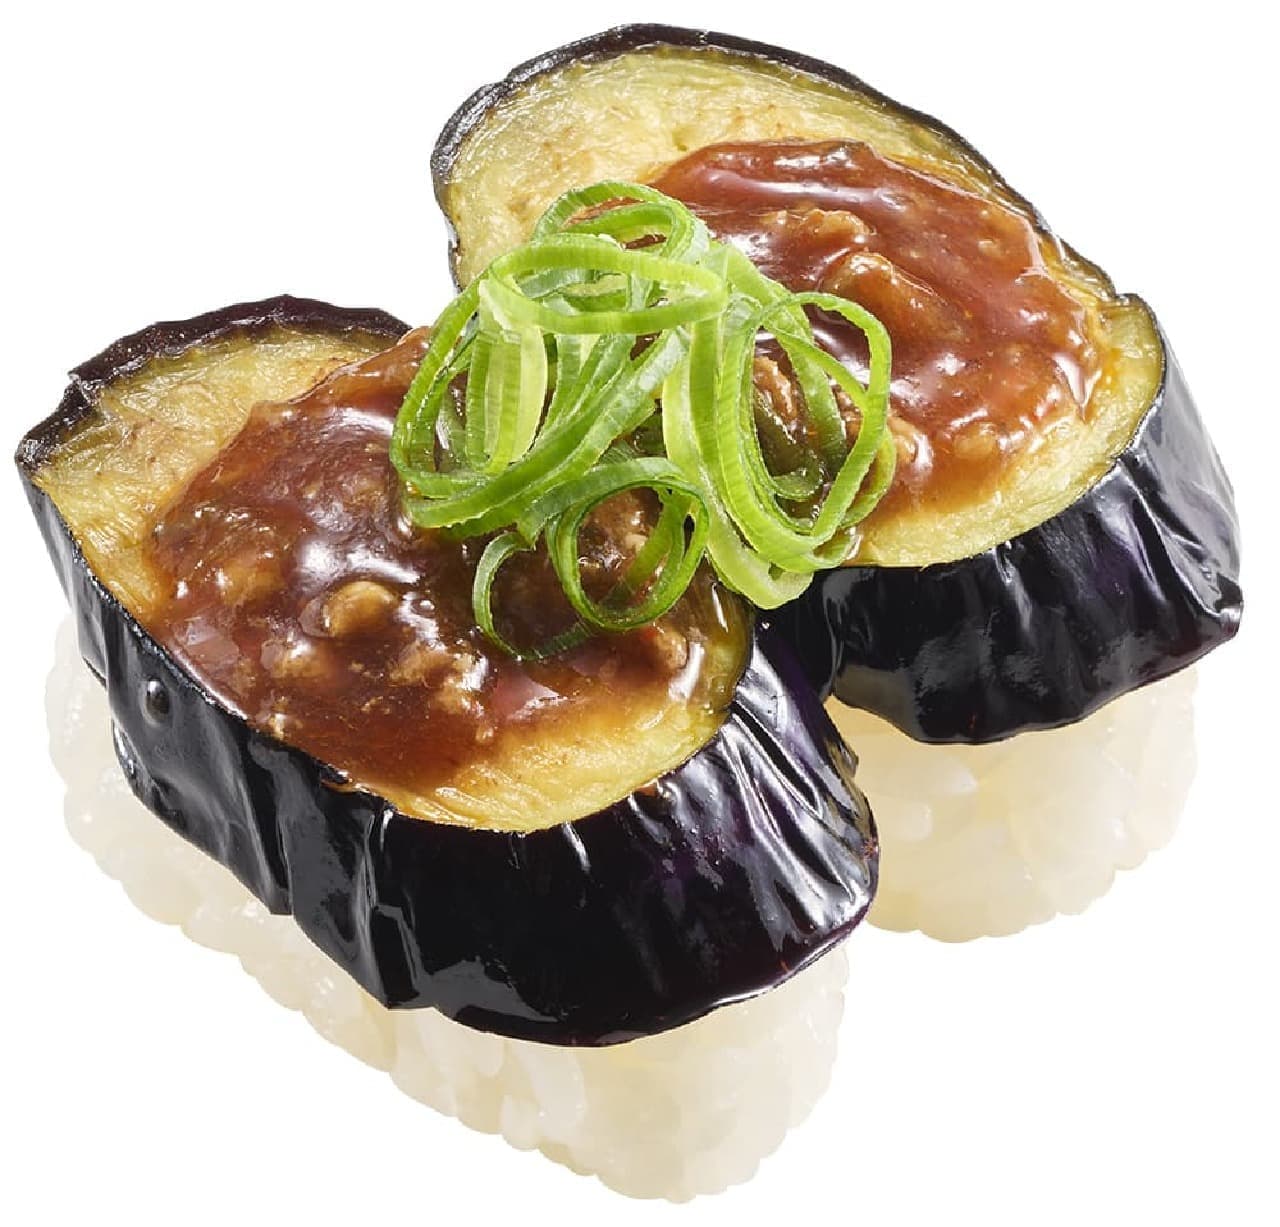 Sushiro "Mapo Fried Eggplant Nigiri" (fried eggplant rice ball)